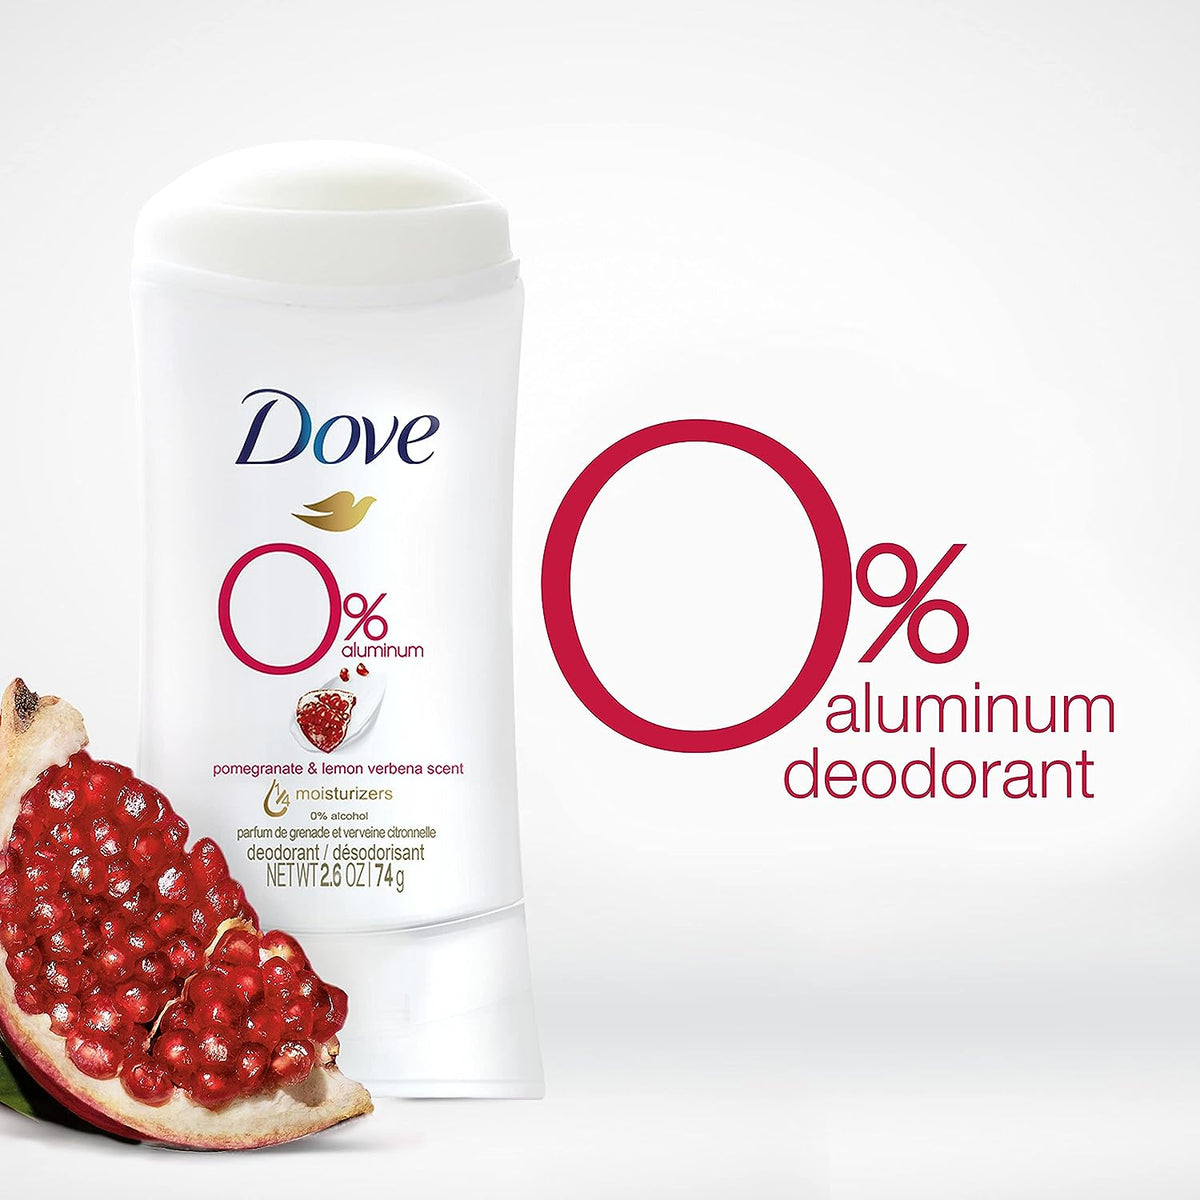 Dove 0% Aluminum Free Deodorant Pormegranate&Lemon Verbena Scent-74gm